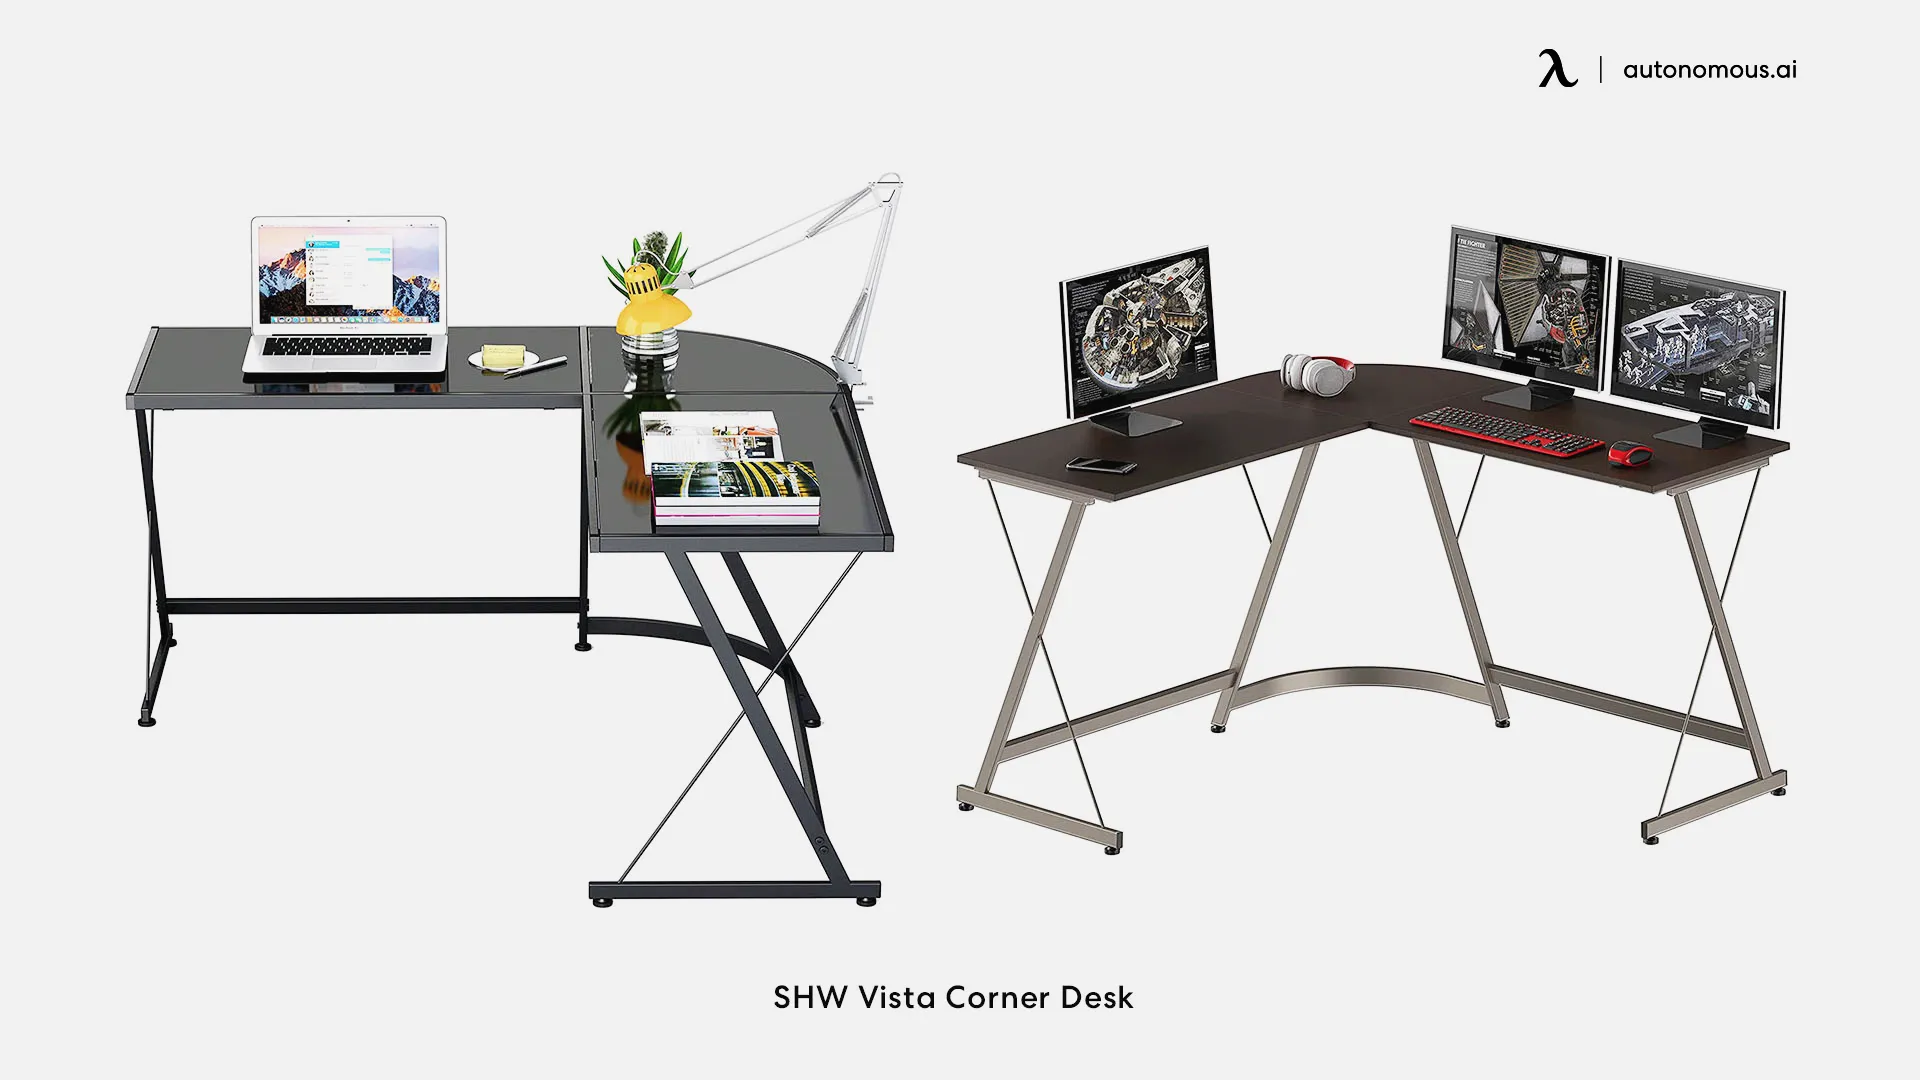 The Corner Desk by SHW Vista